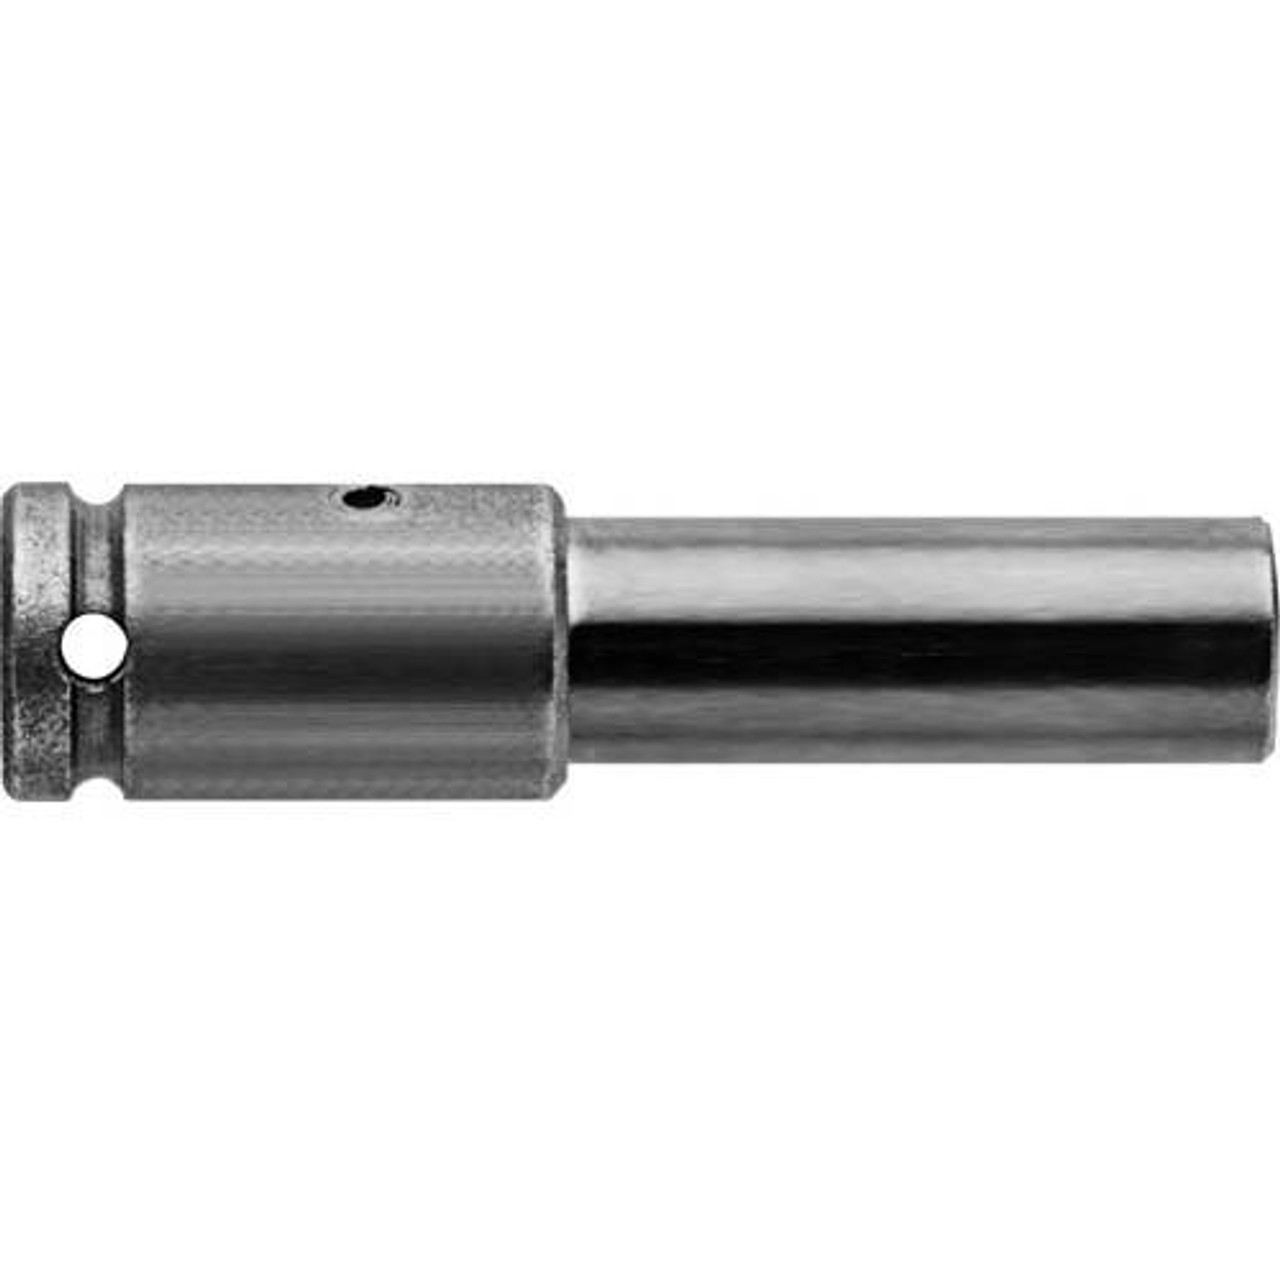 1piece Drill bits Extension Bar 1-1/4"-7 Male Thread to 1-1/4"-7 Female Thread